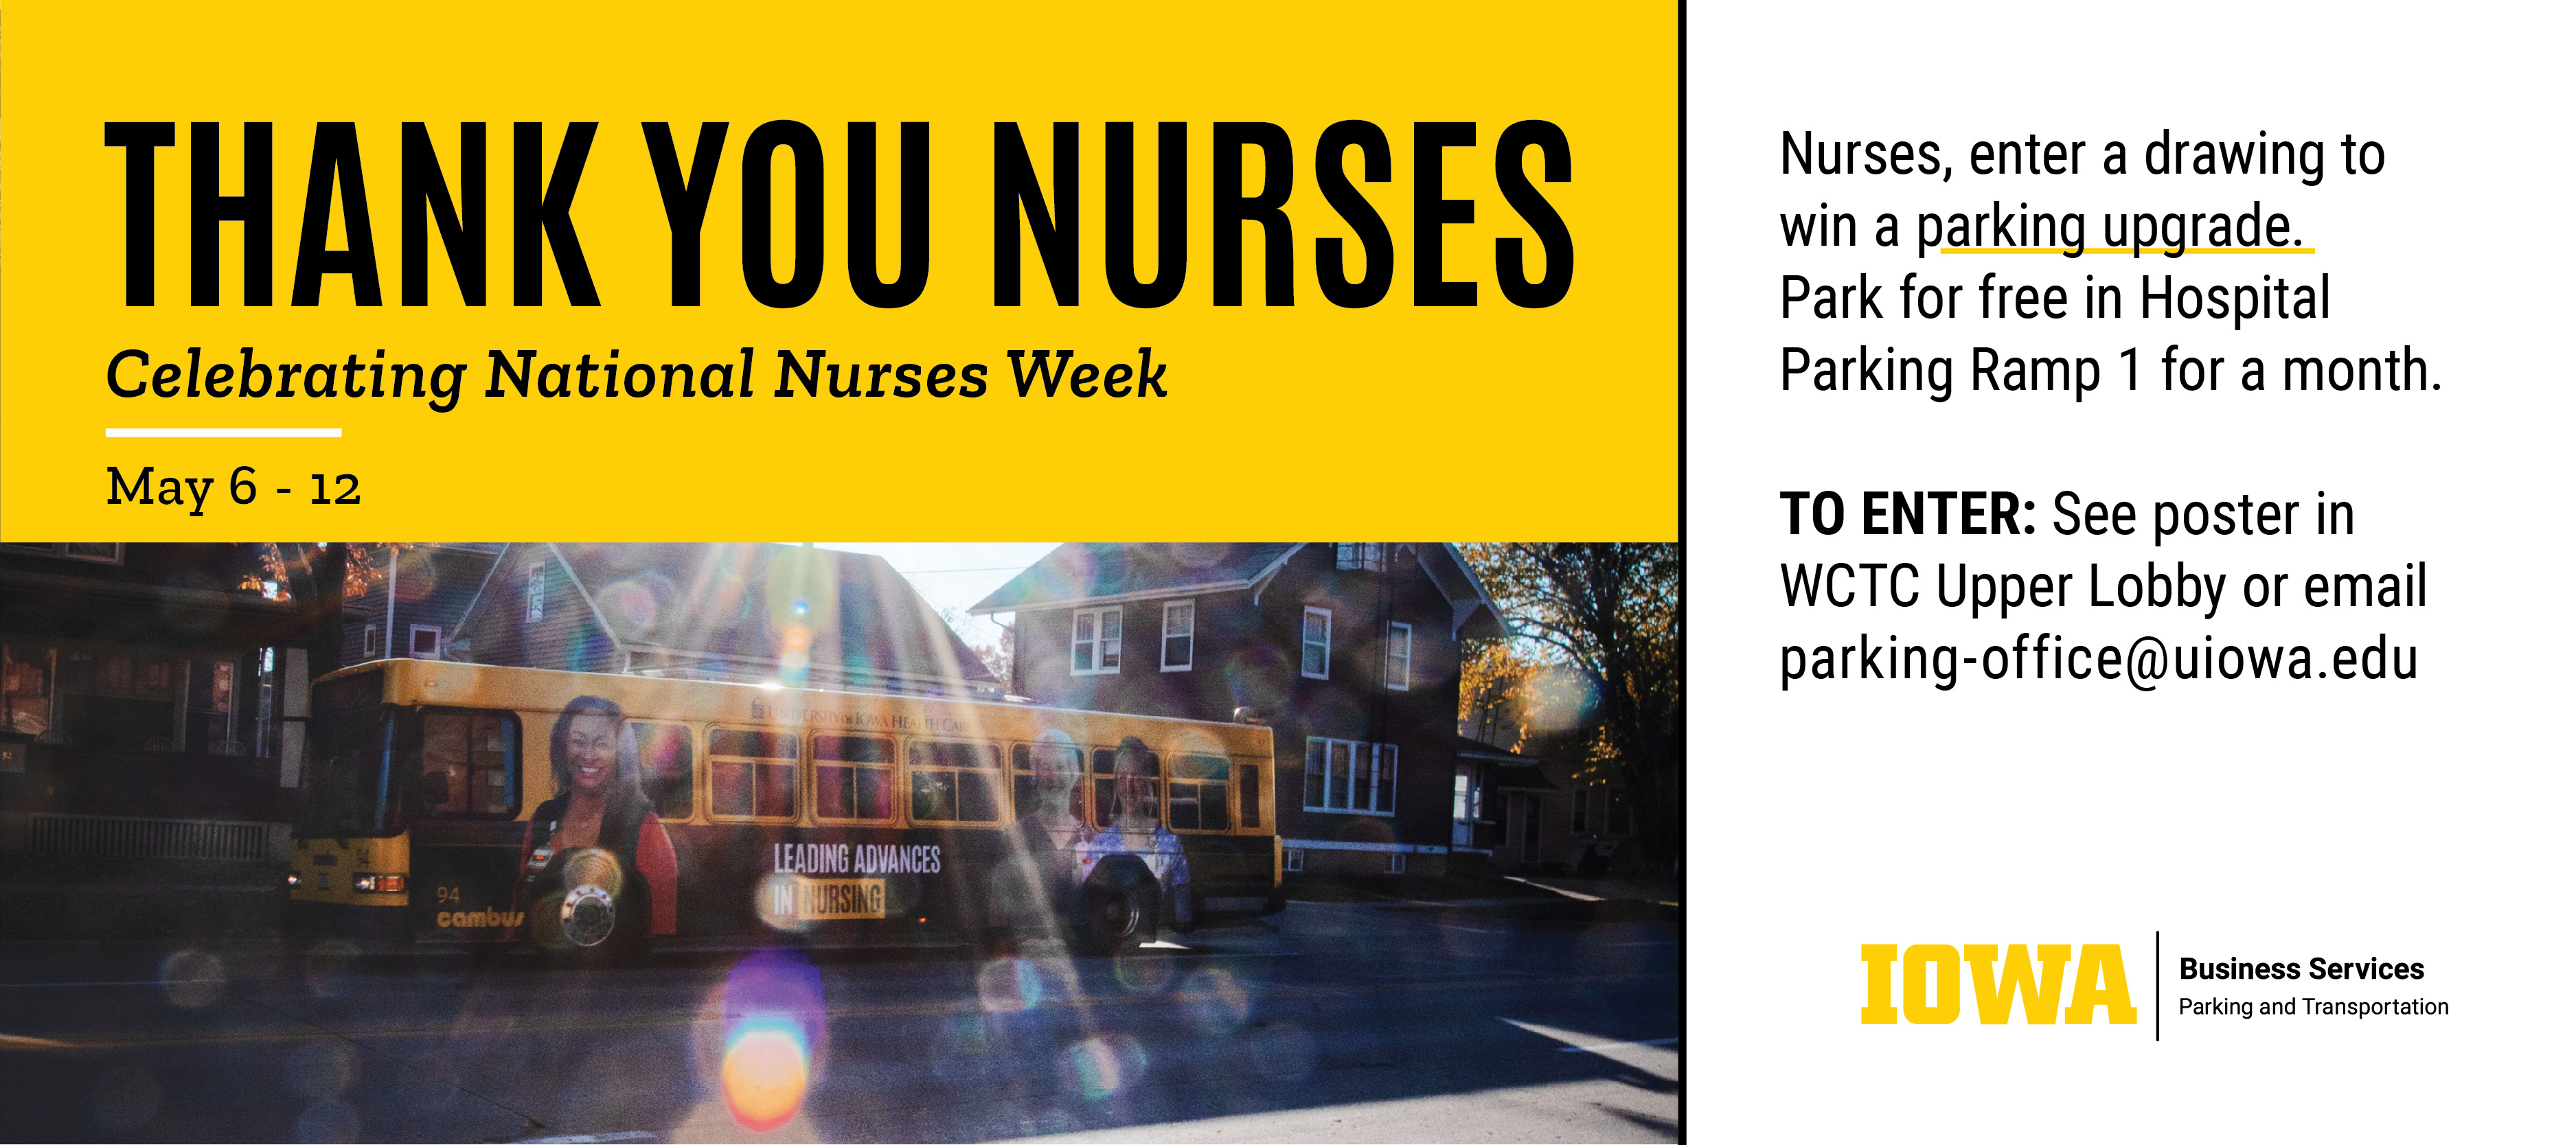 Thank you Nurses. Parking and Transportation celebrating National Nurses Week. Nurses, enter a drawing to win a free parking upgrade.